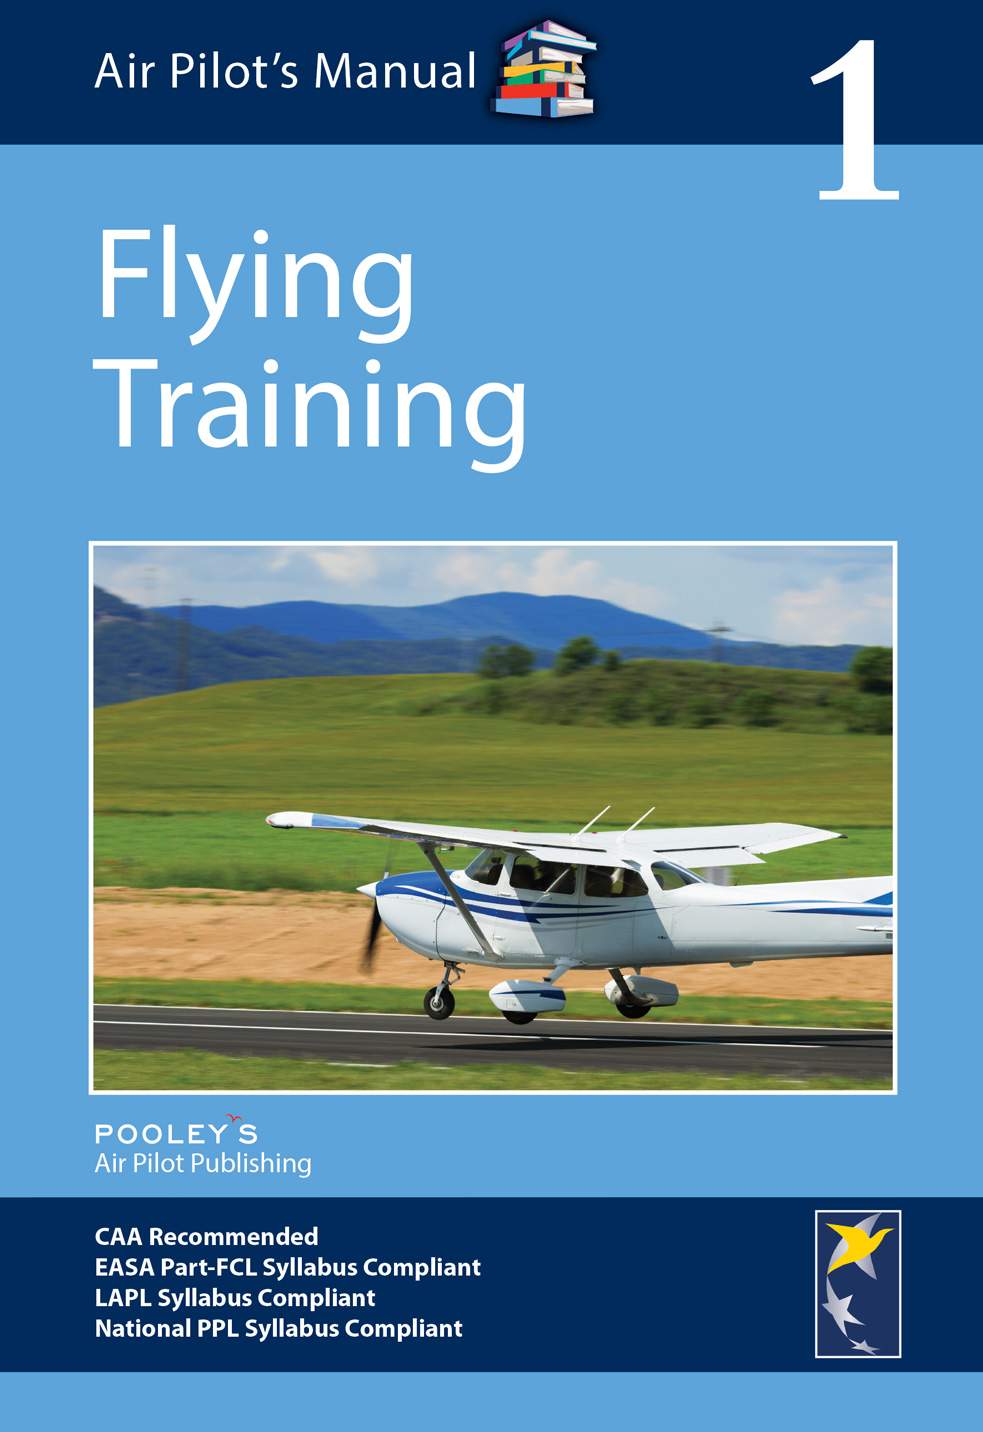 Seria "Air Pilot Manual", tom 1 - "Flying training"